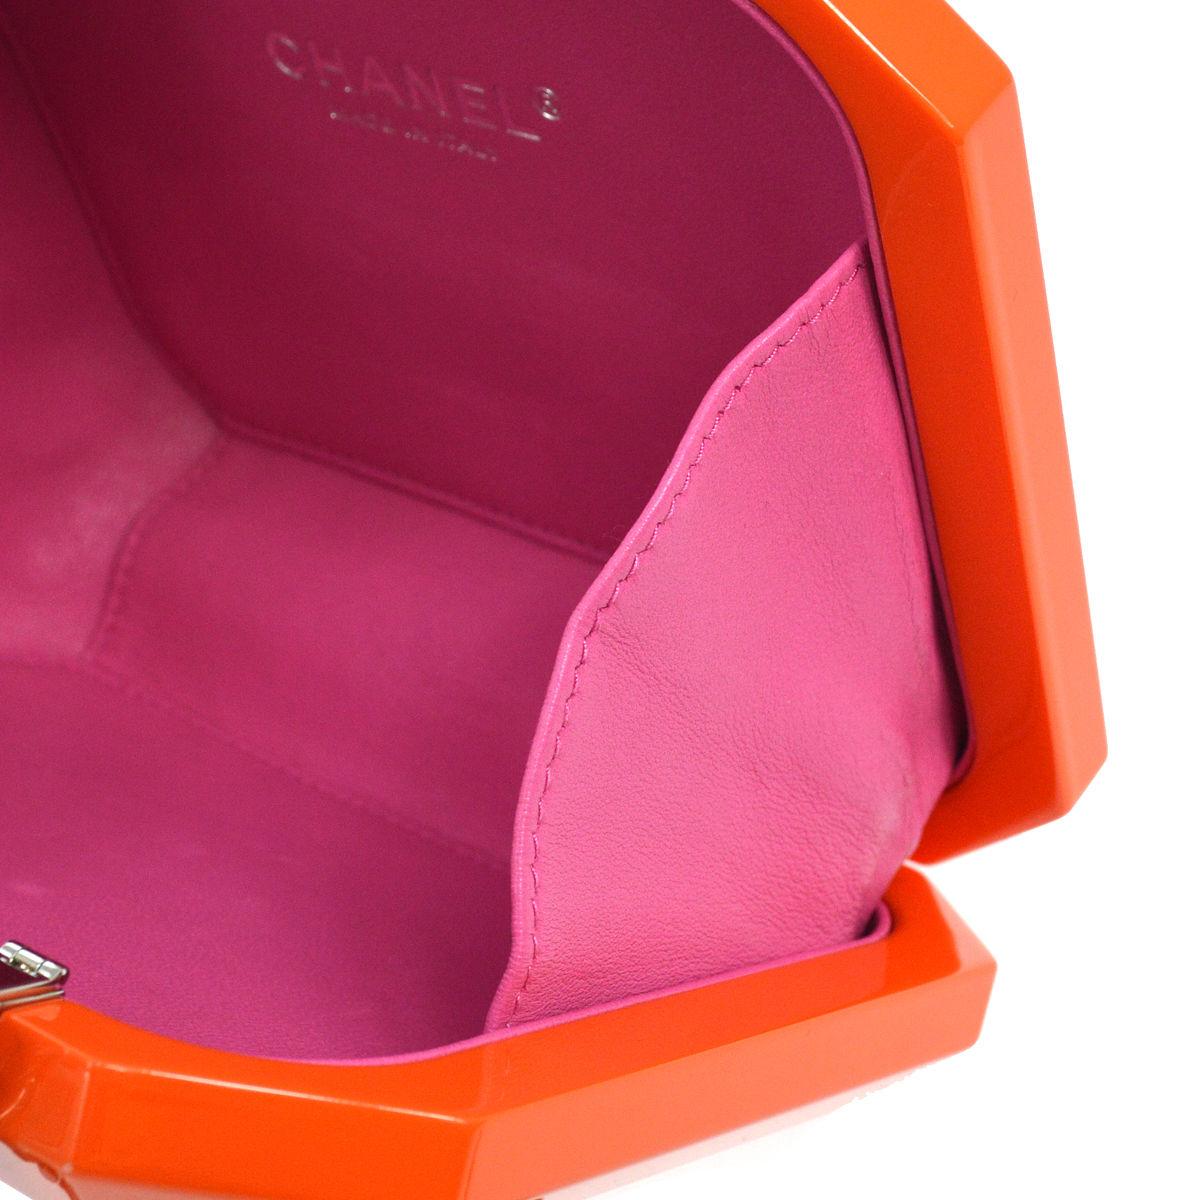 Chanel Rare Runway Pink & Orange Ombre Resin Plexiglass Brick Clutch Minaudière 2